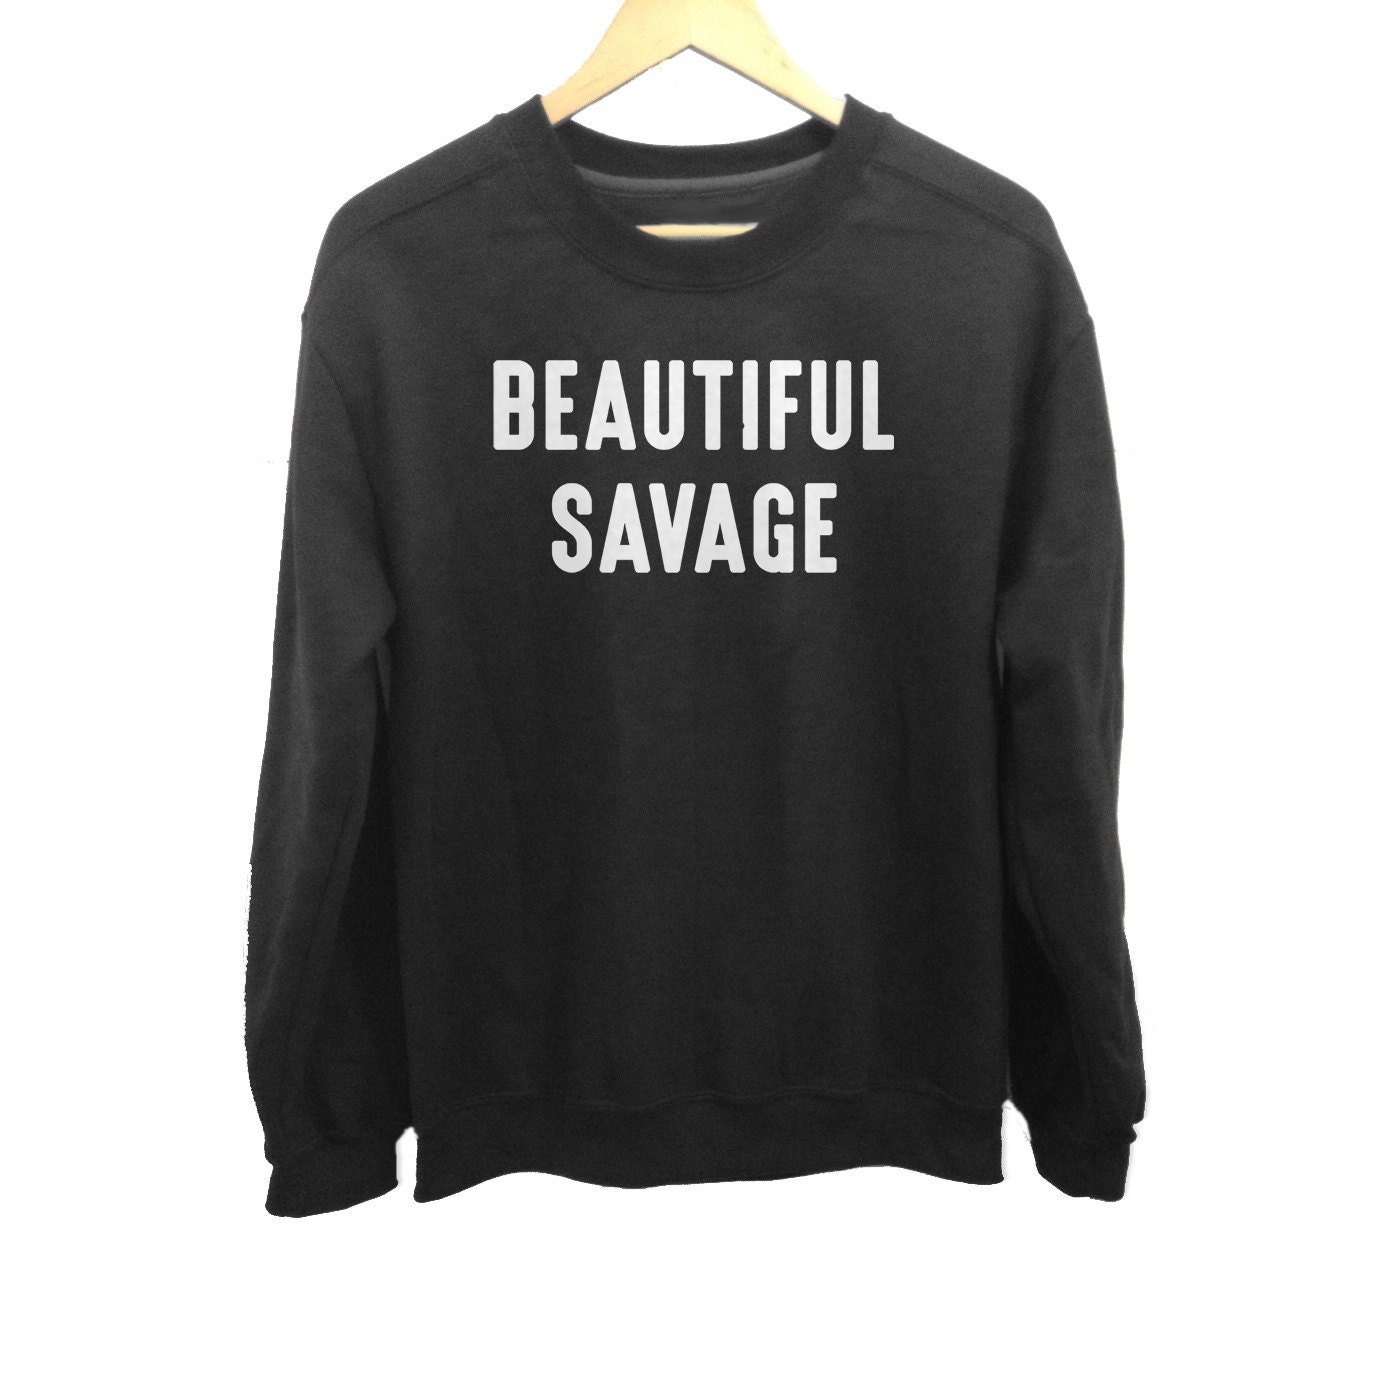 Beautiful Savage Sweatshirt Tumblr Aesthetic Fashion